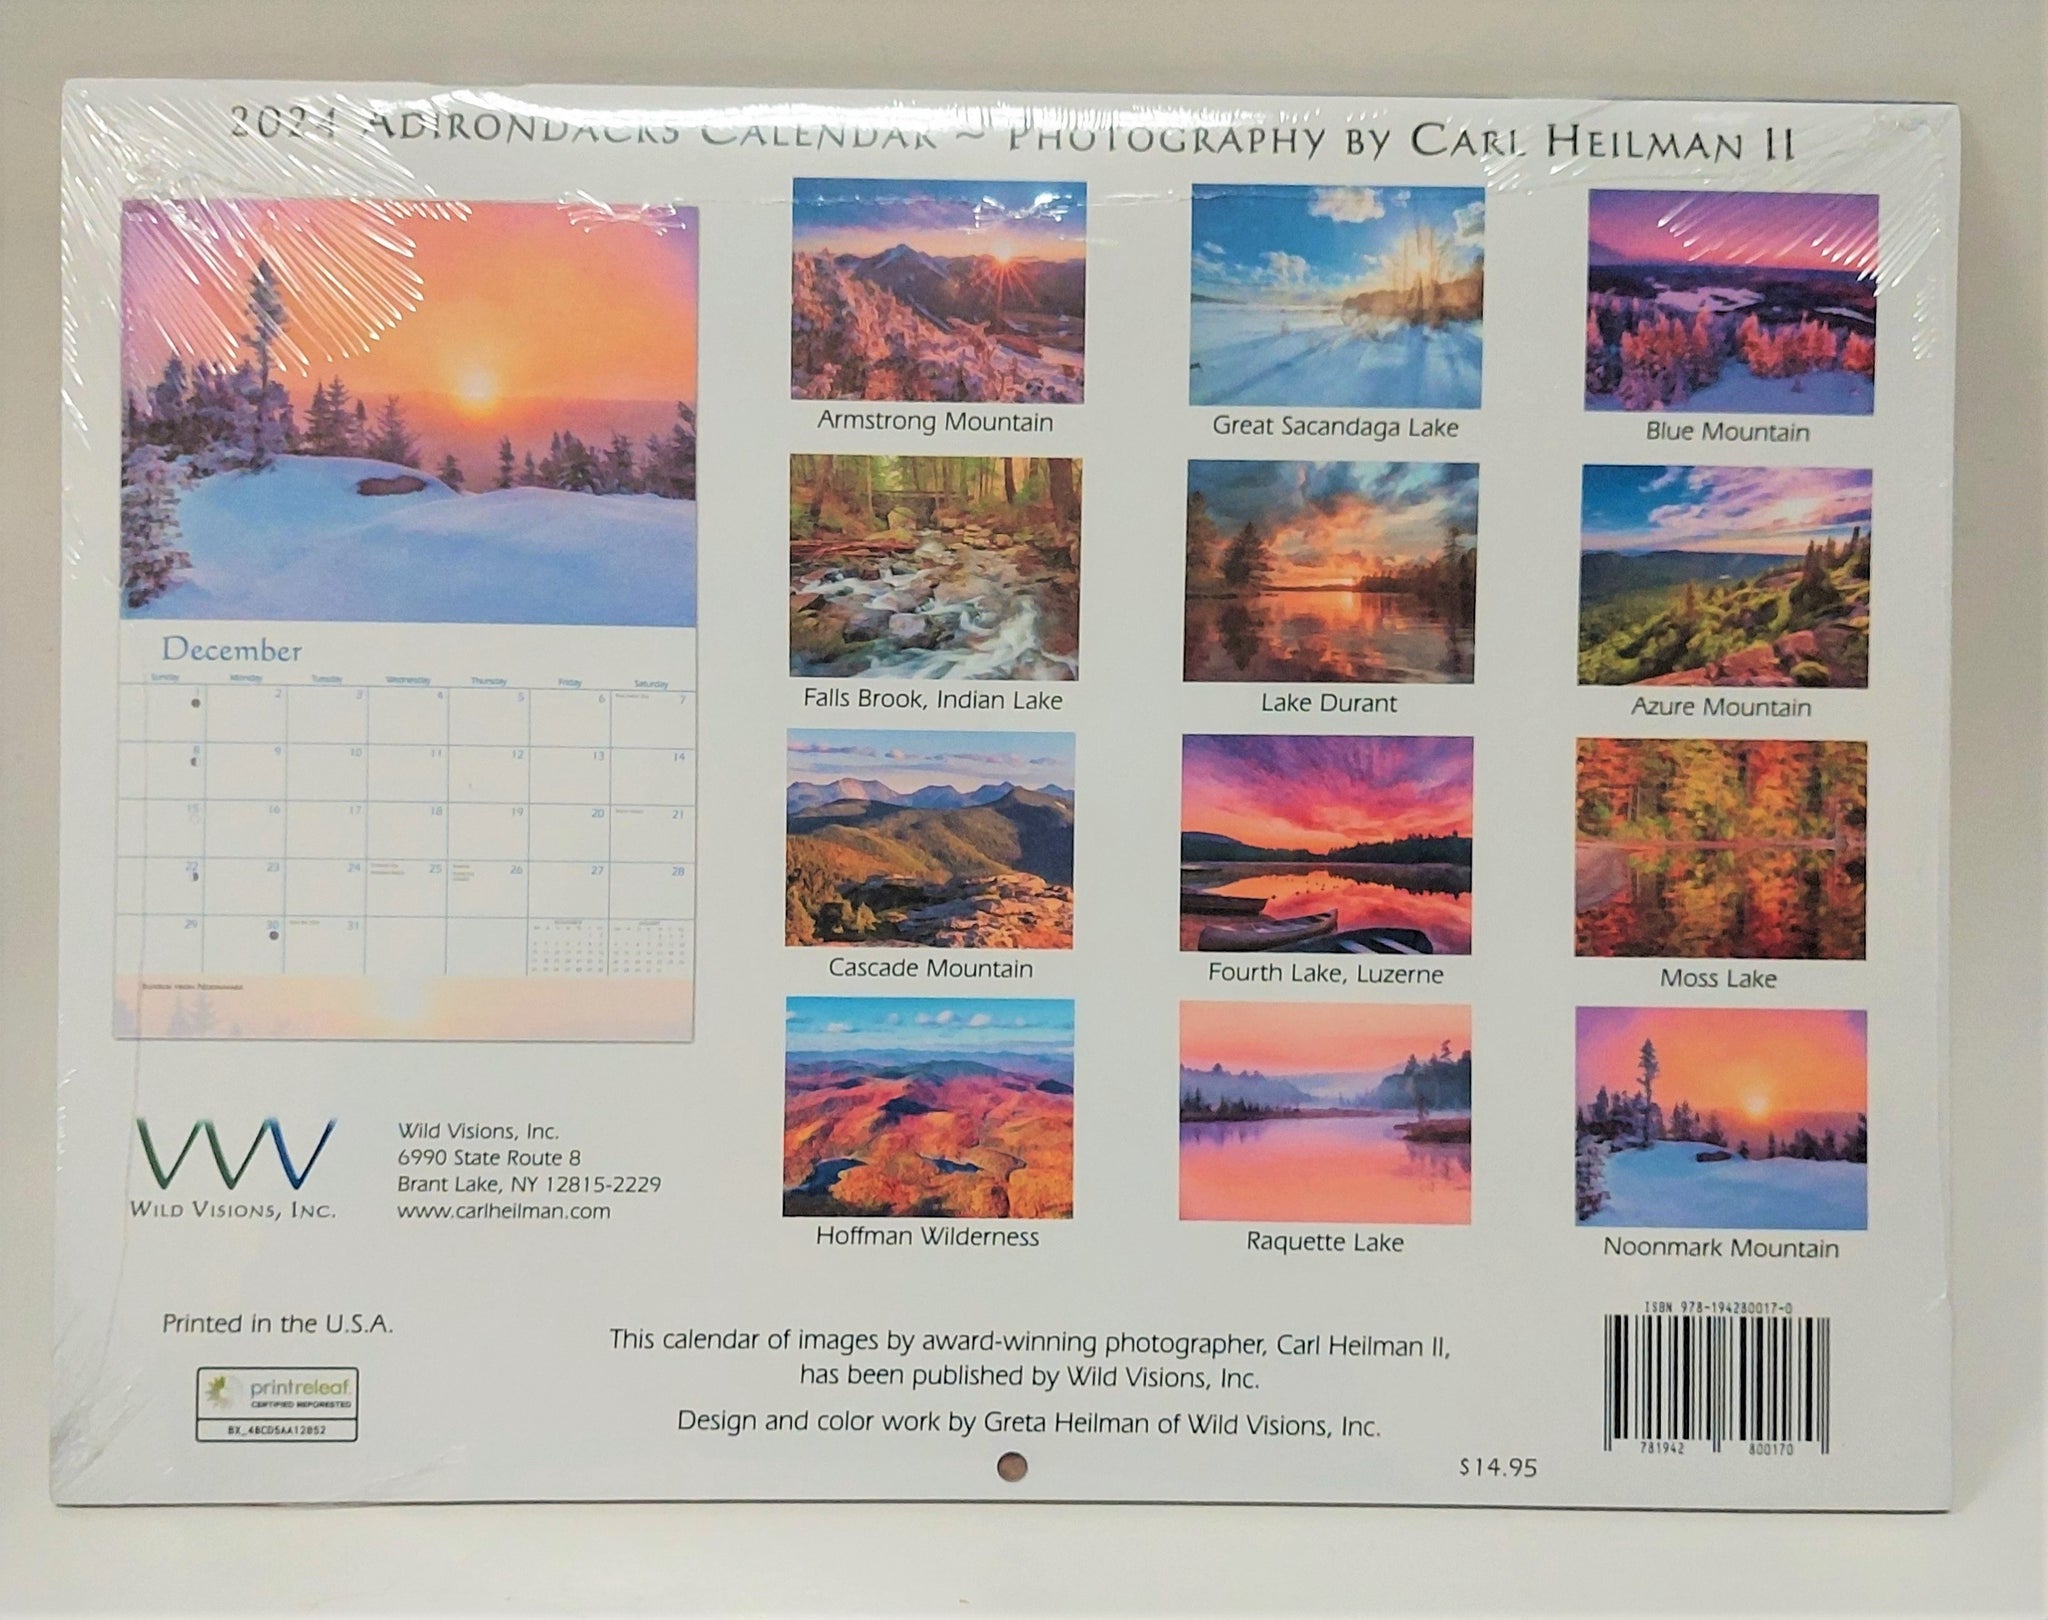 2024 Adirondacks Calendar with Photography by Carl Heilman ll The